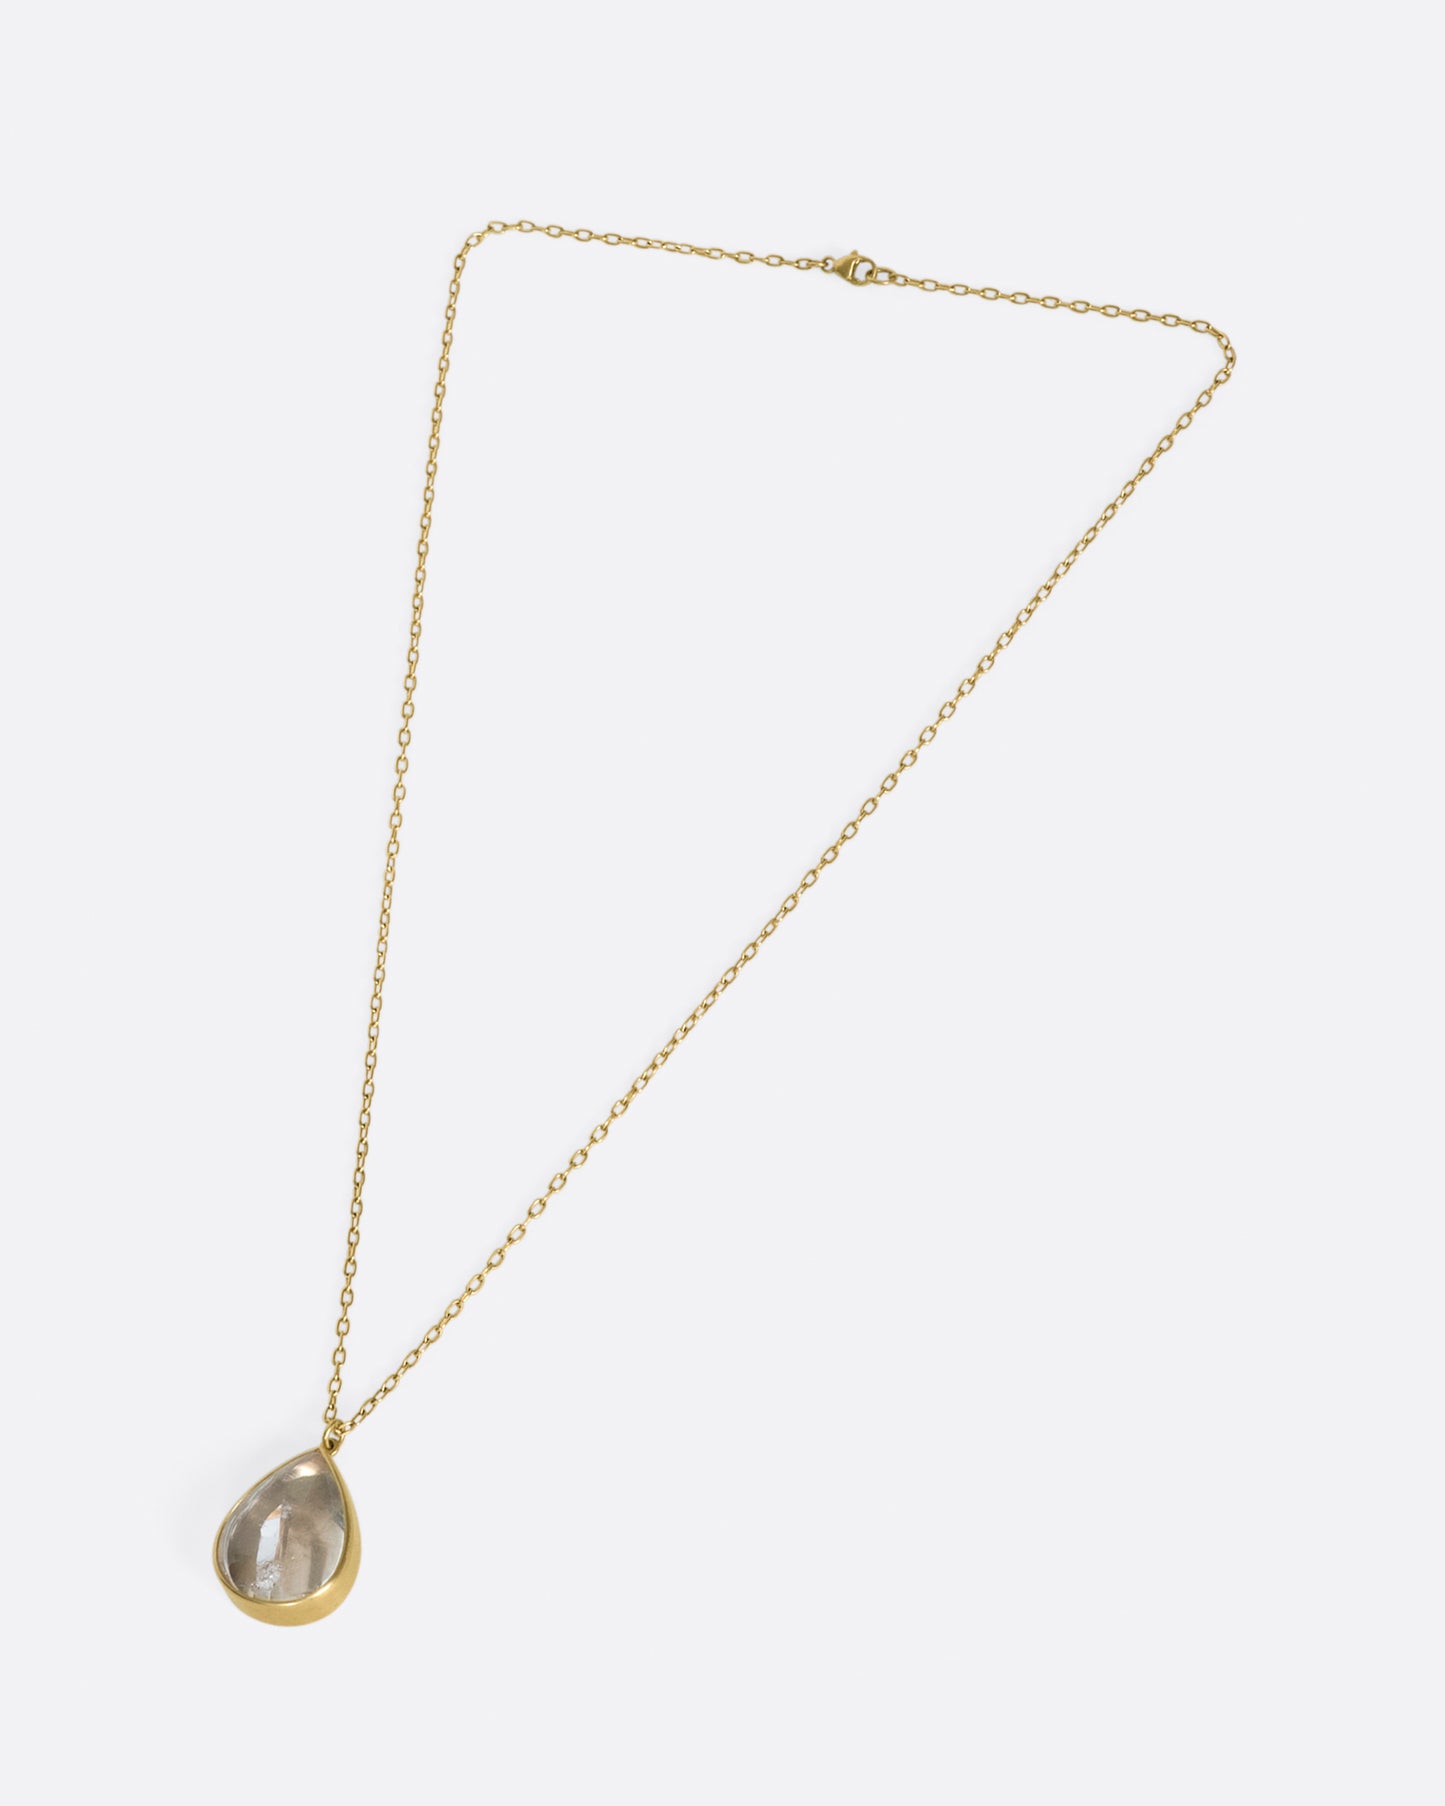 A gold necklace with a quartz crystal teardrop pendant.